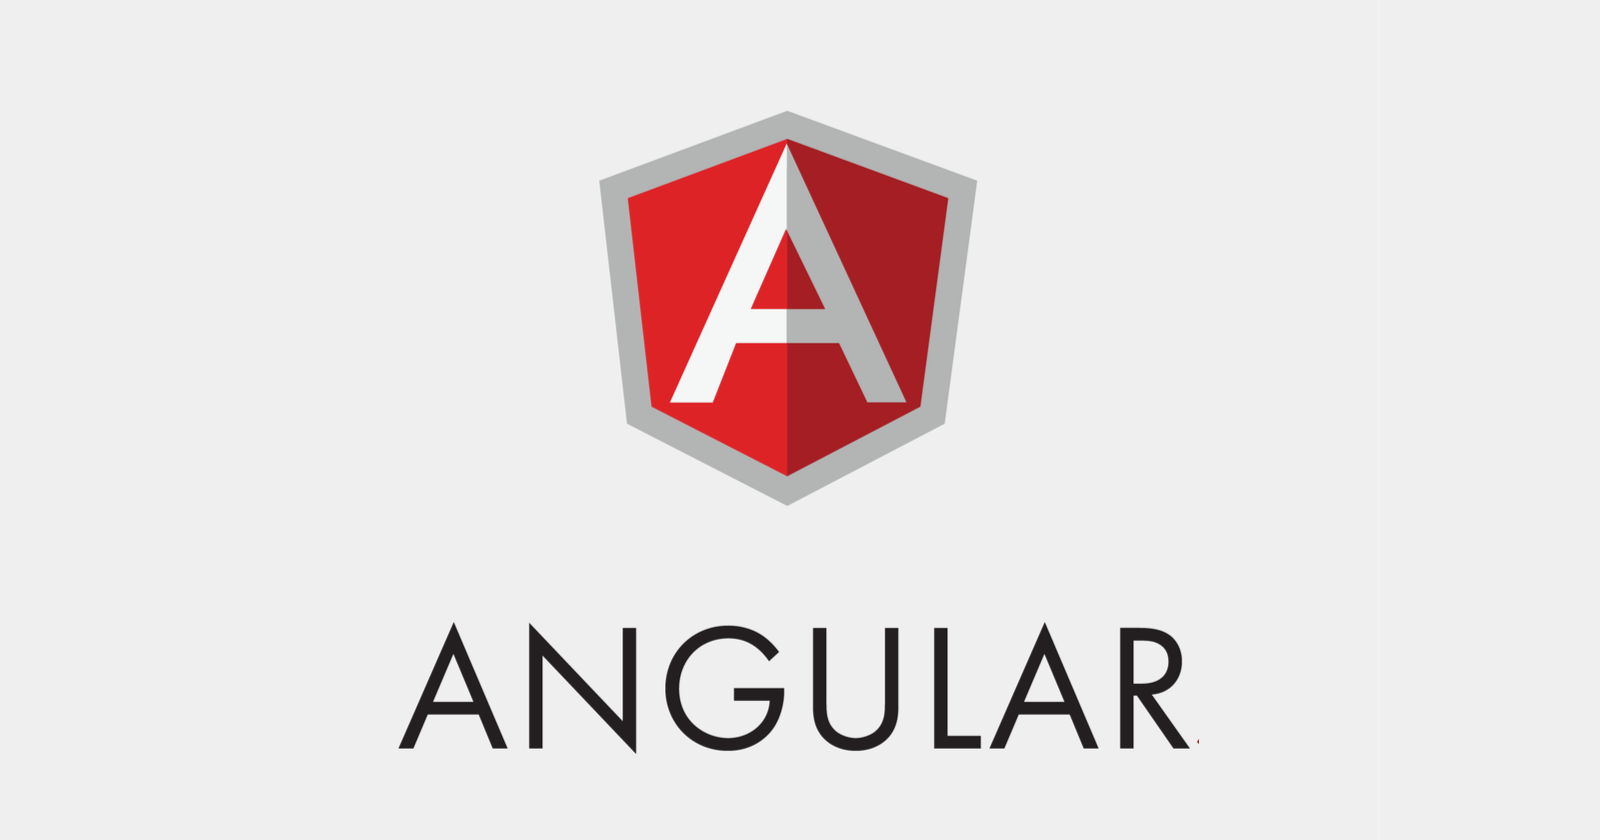 Why Use Angular for Web Development